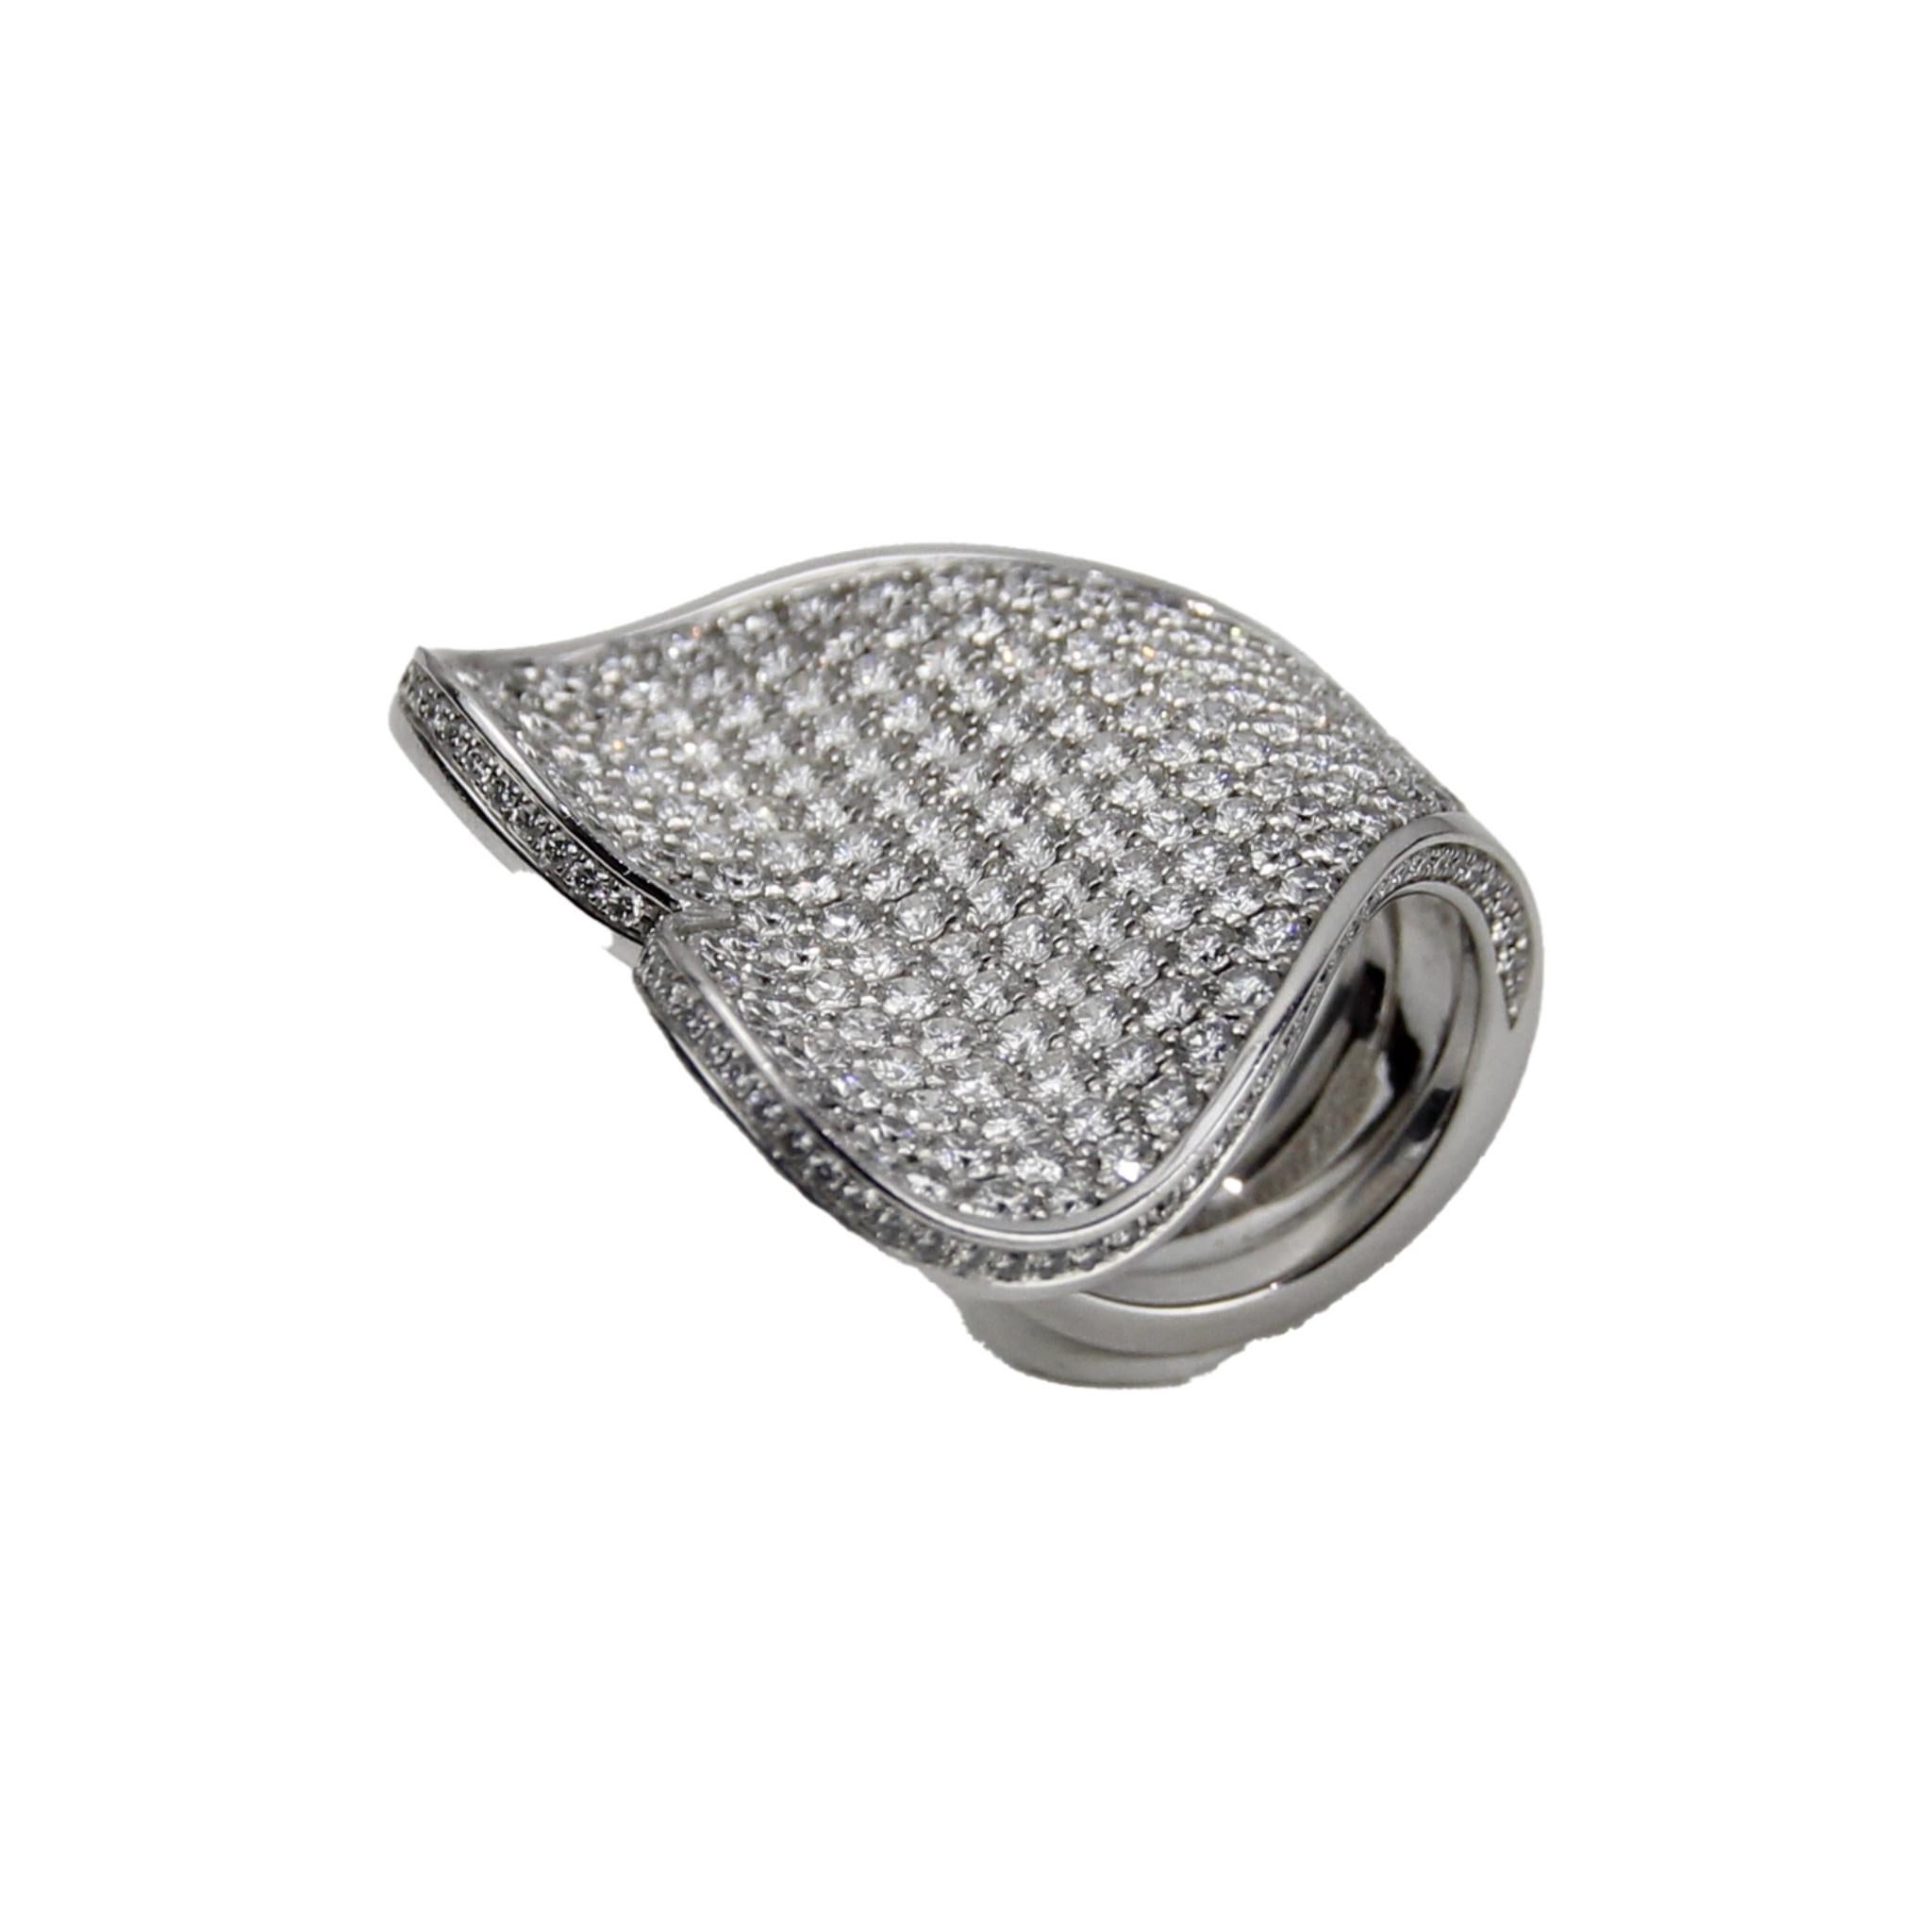 Roger Dubuis Heart Ring
18K White Gold
Diamond: 7.50ctw
Size: 6.5
SKU: MRD01433
Retail price: $32,000.00
